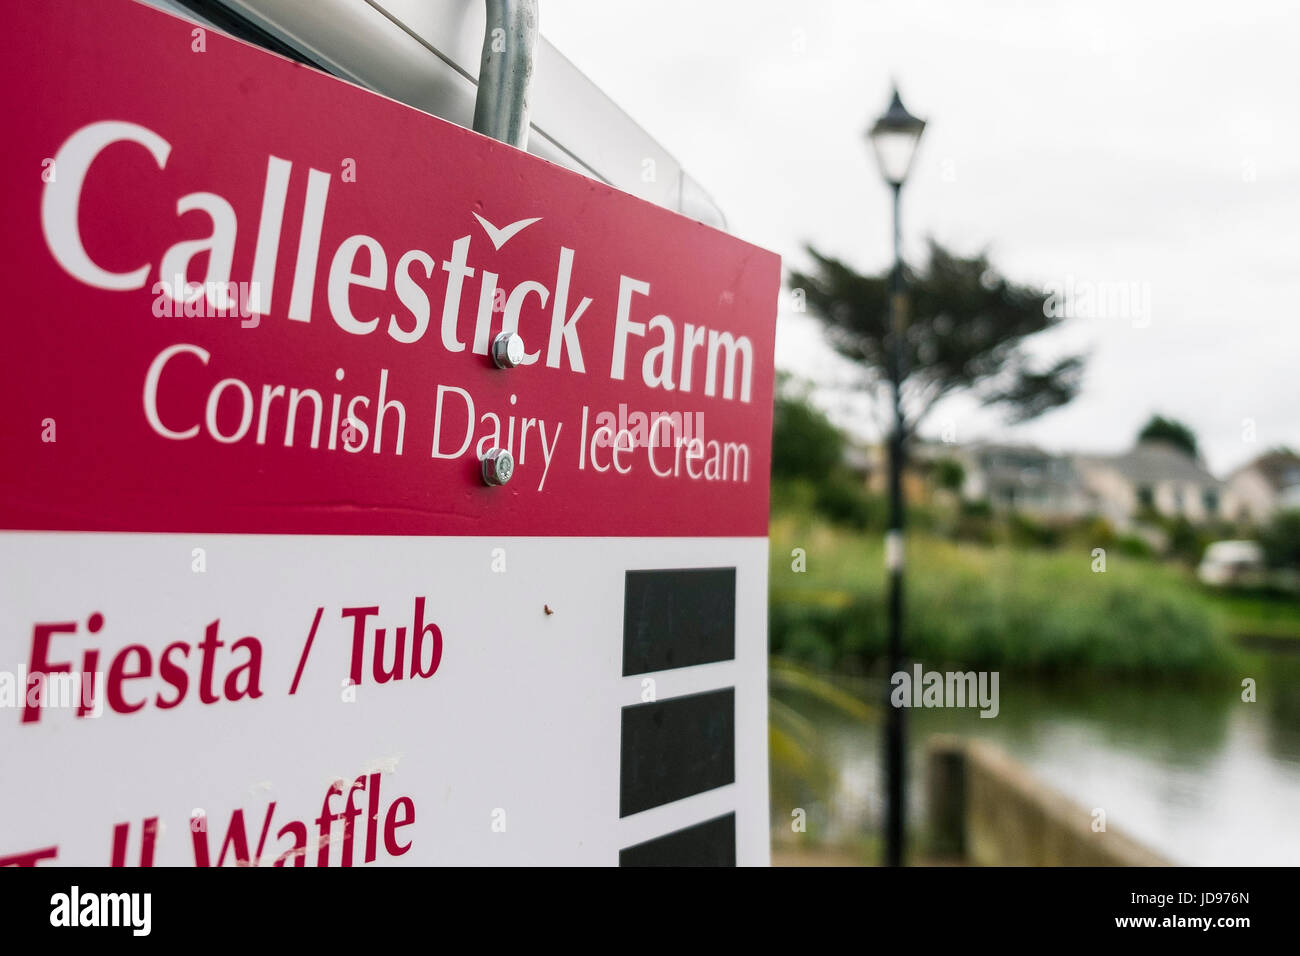 A sign advertising Callestick Farm Cornish Dairy Ice Crea. Stock Photo